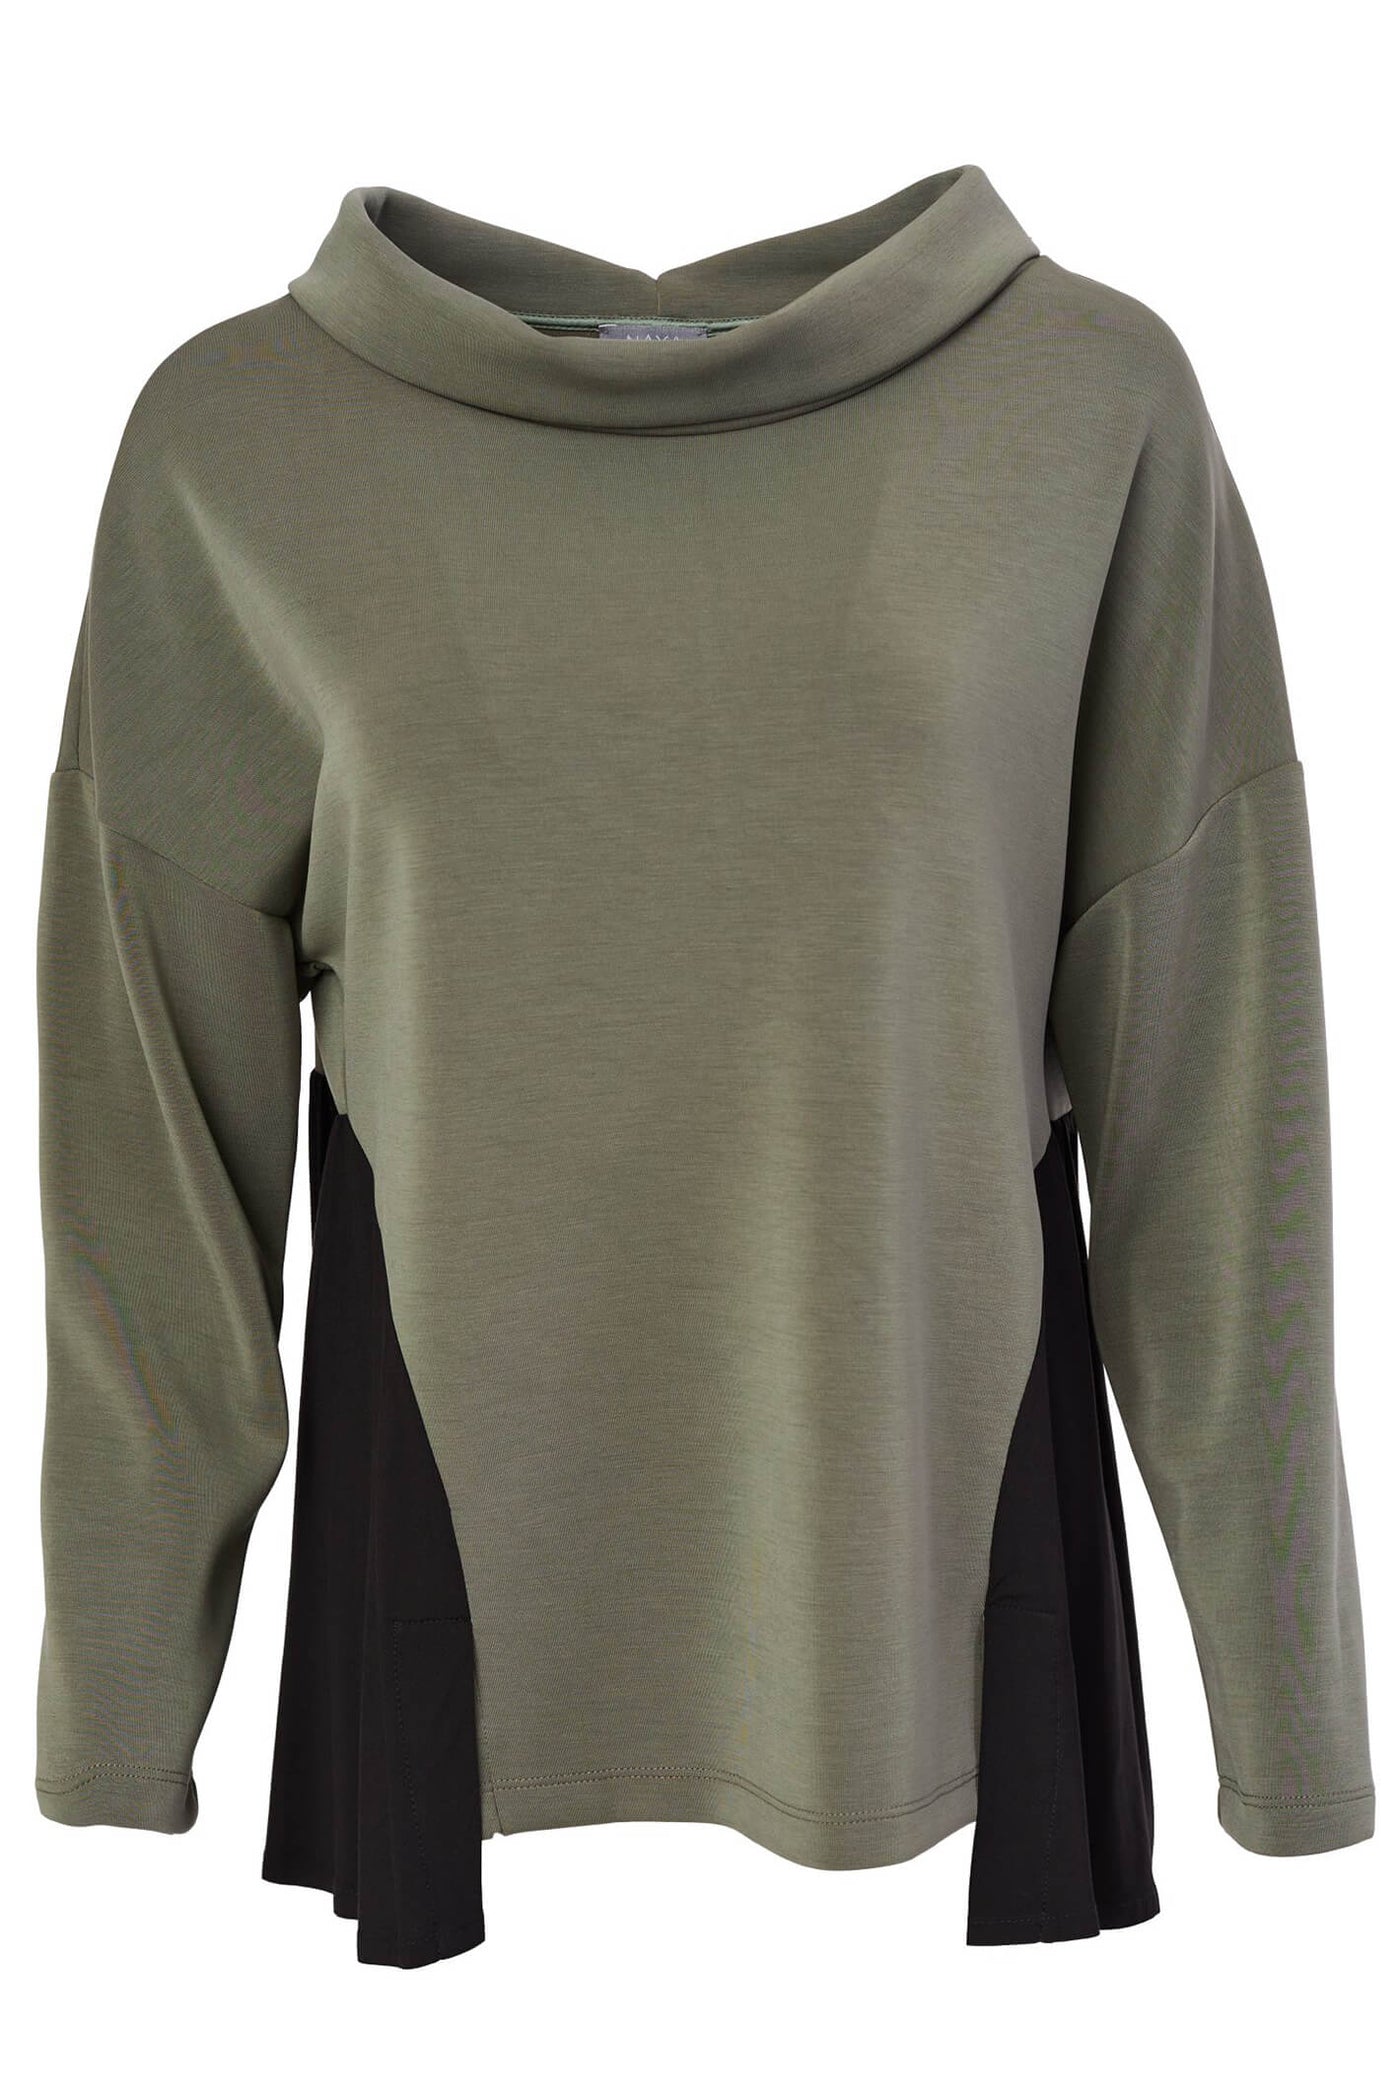 Naya NAW23219 Khaki Green Sleeved High Neck Fleece Top - Rouge Boutique